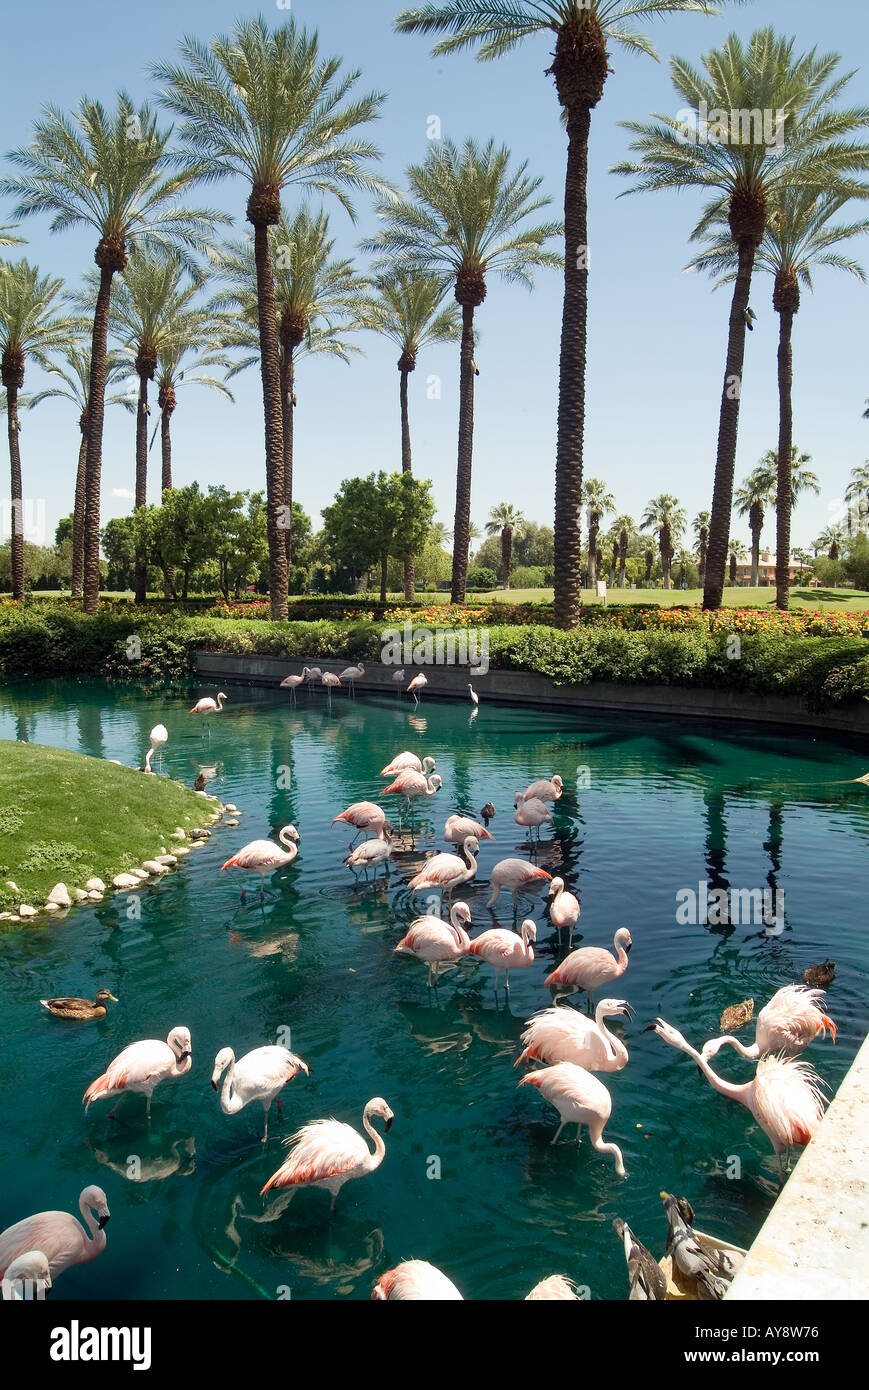 Palm Springs California CA Desert Springs JW Marriott Resort & Spa in Palm Desert, Flamingo's standing in water in a pond,  nex Stock Photo